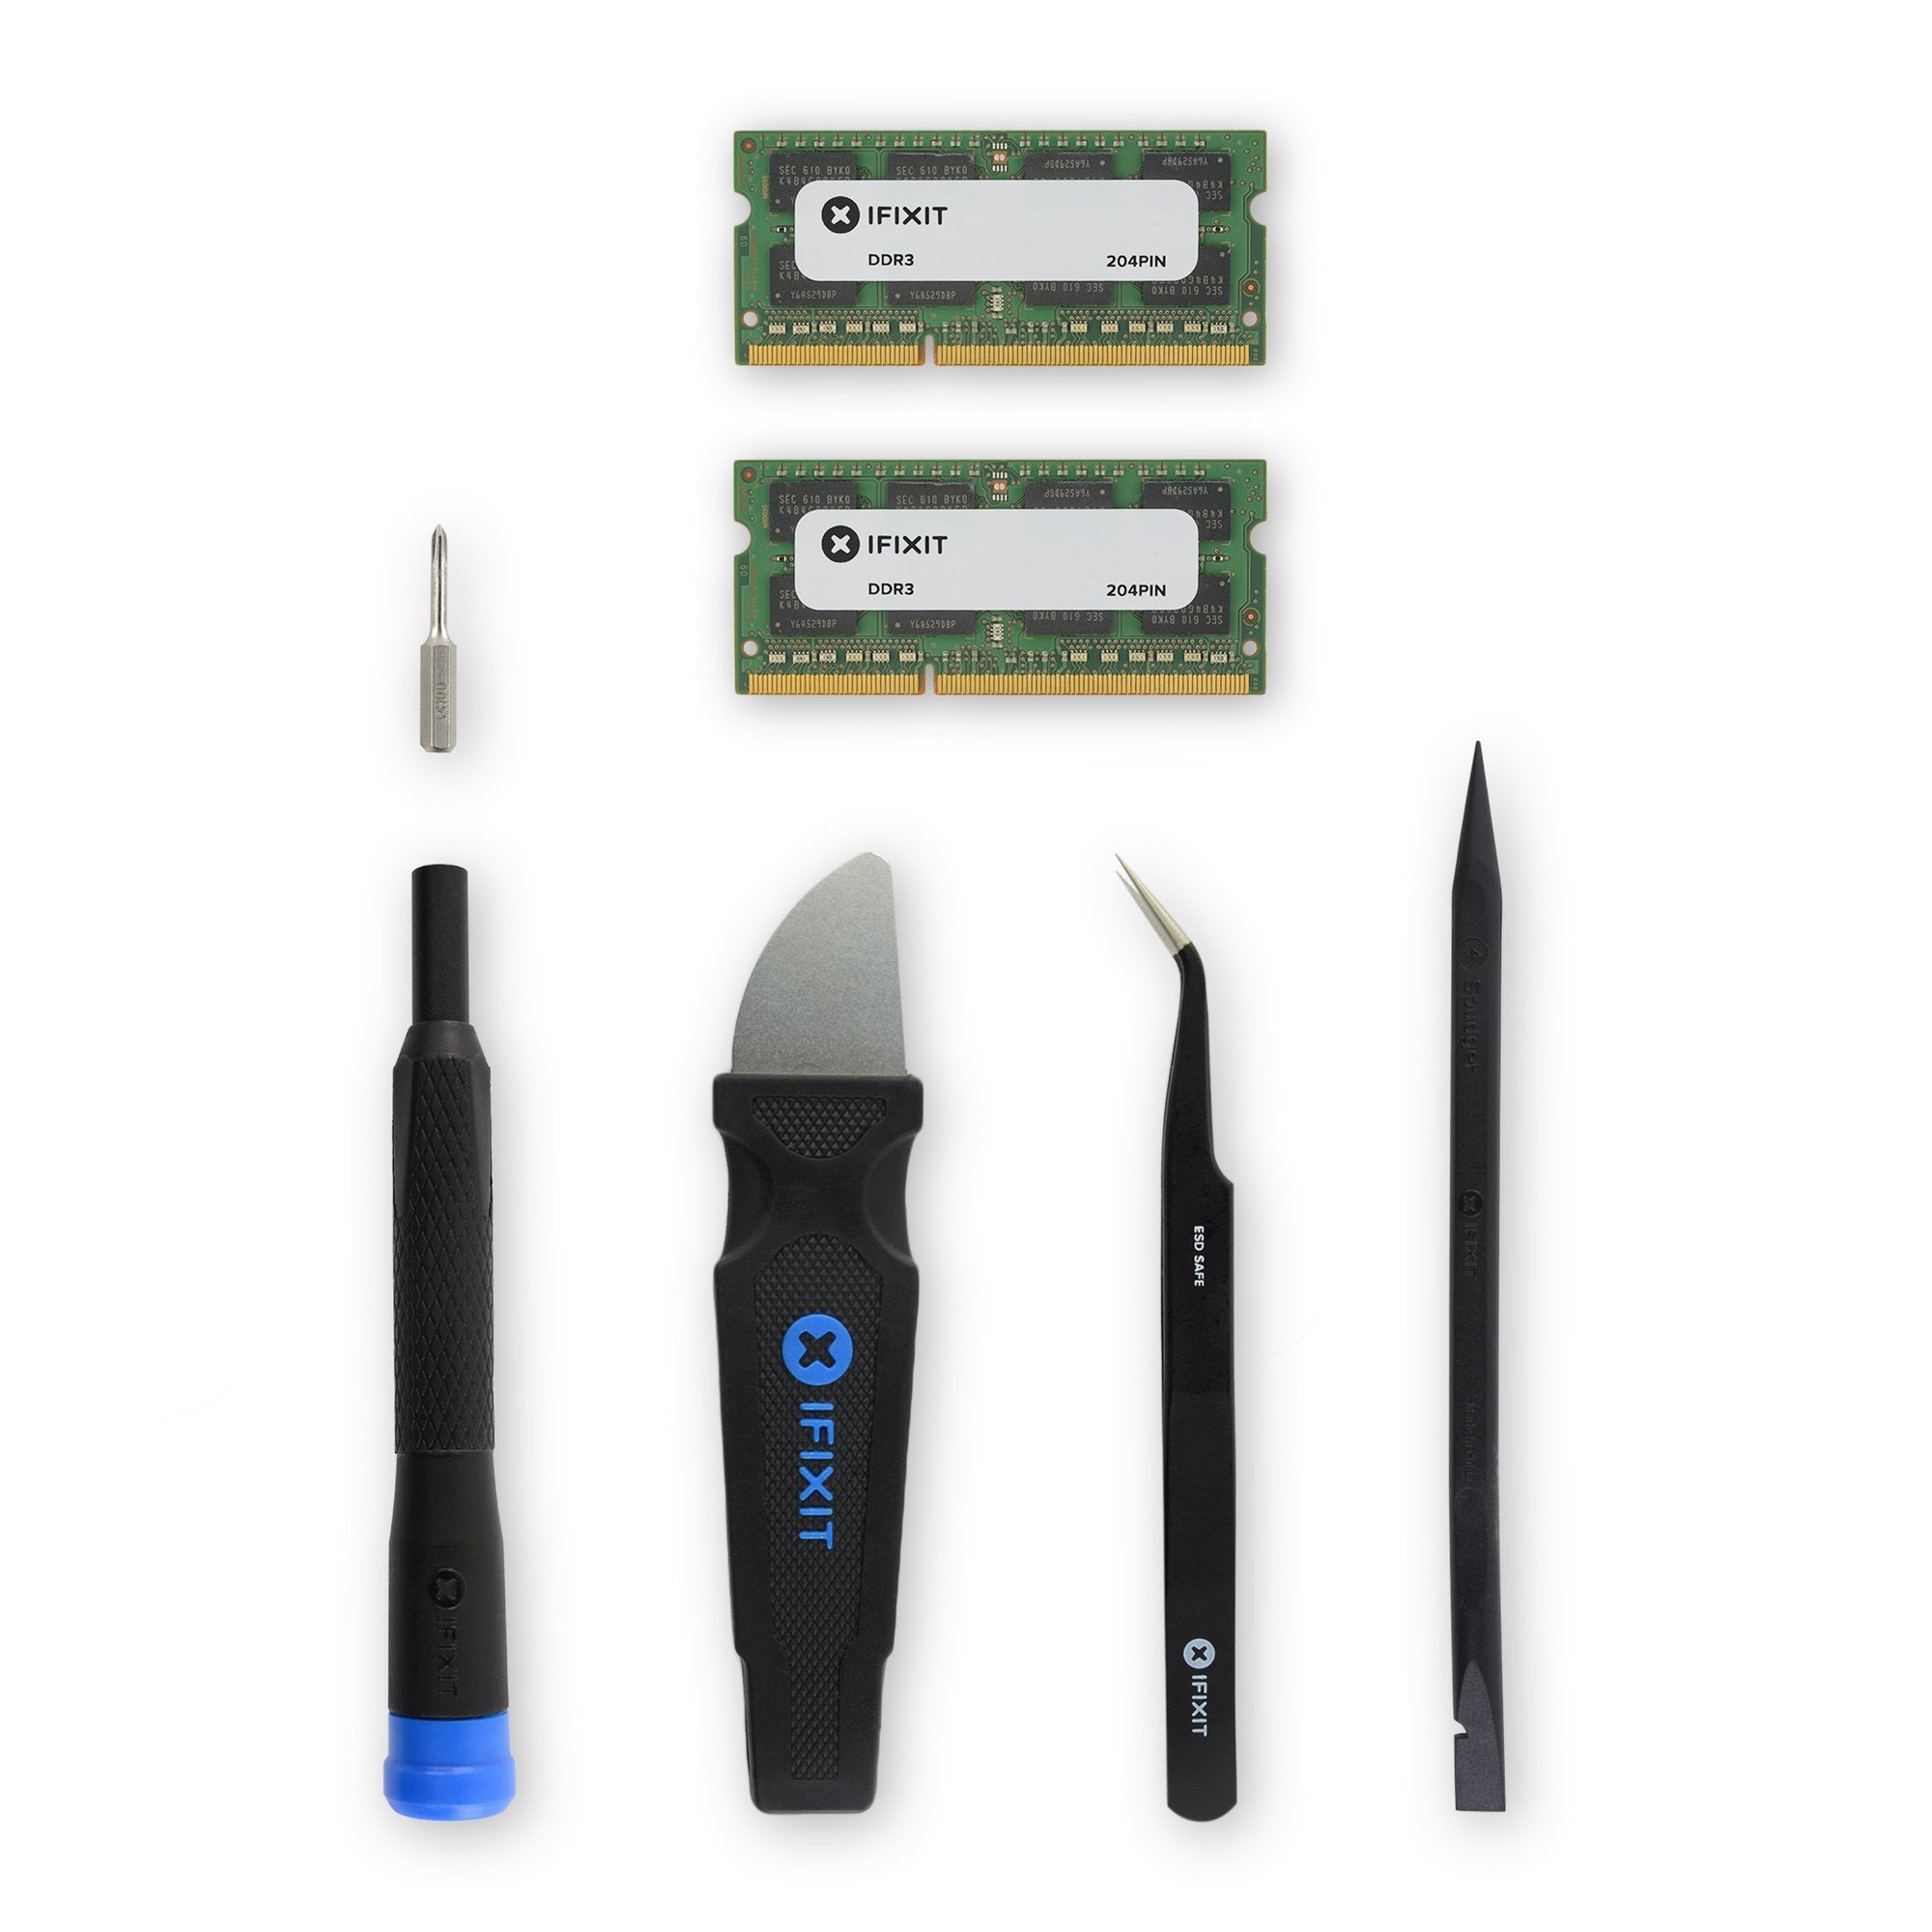 Mac mini 2009 Memory Maxxer RAM Upgrade Kit